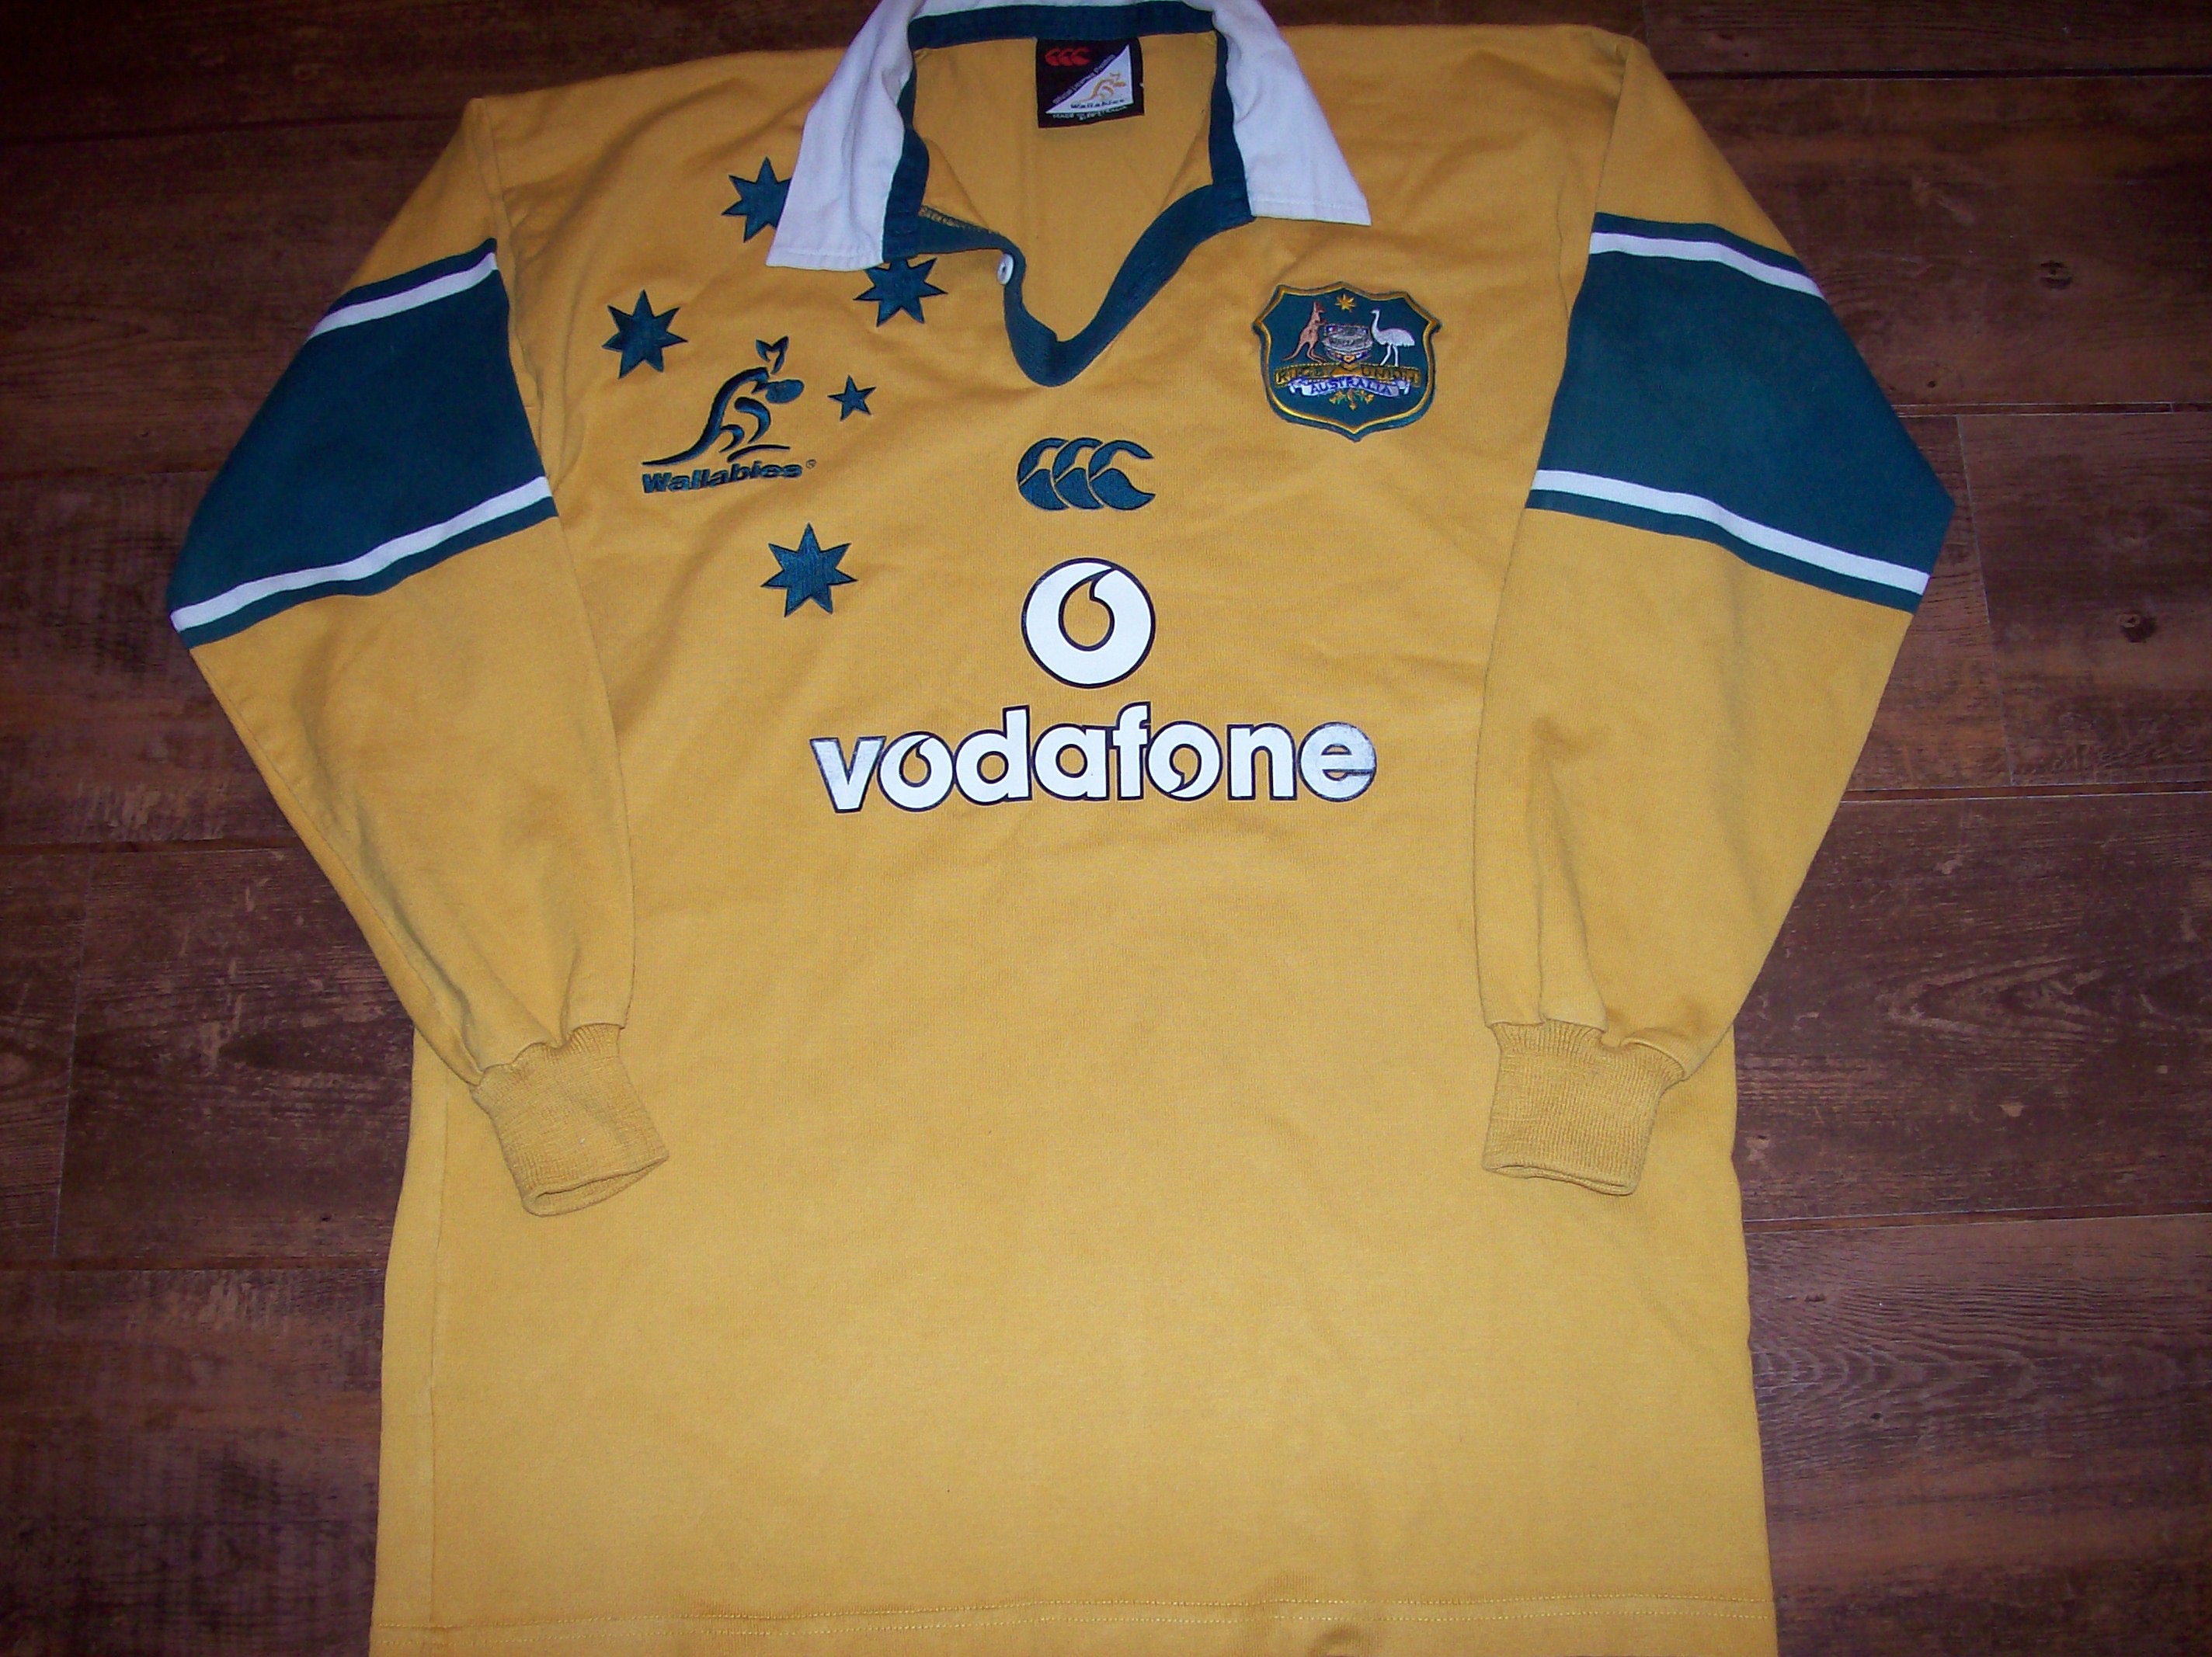 1999 wallabies jersey